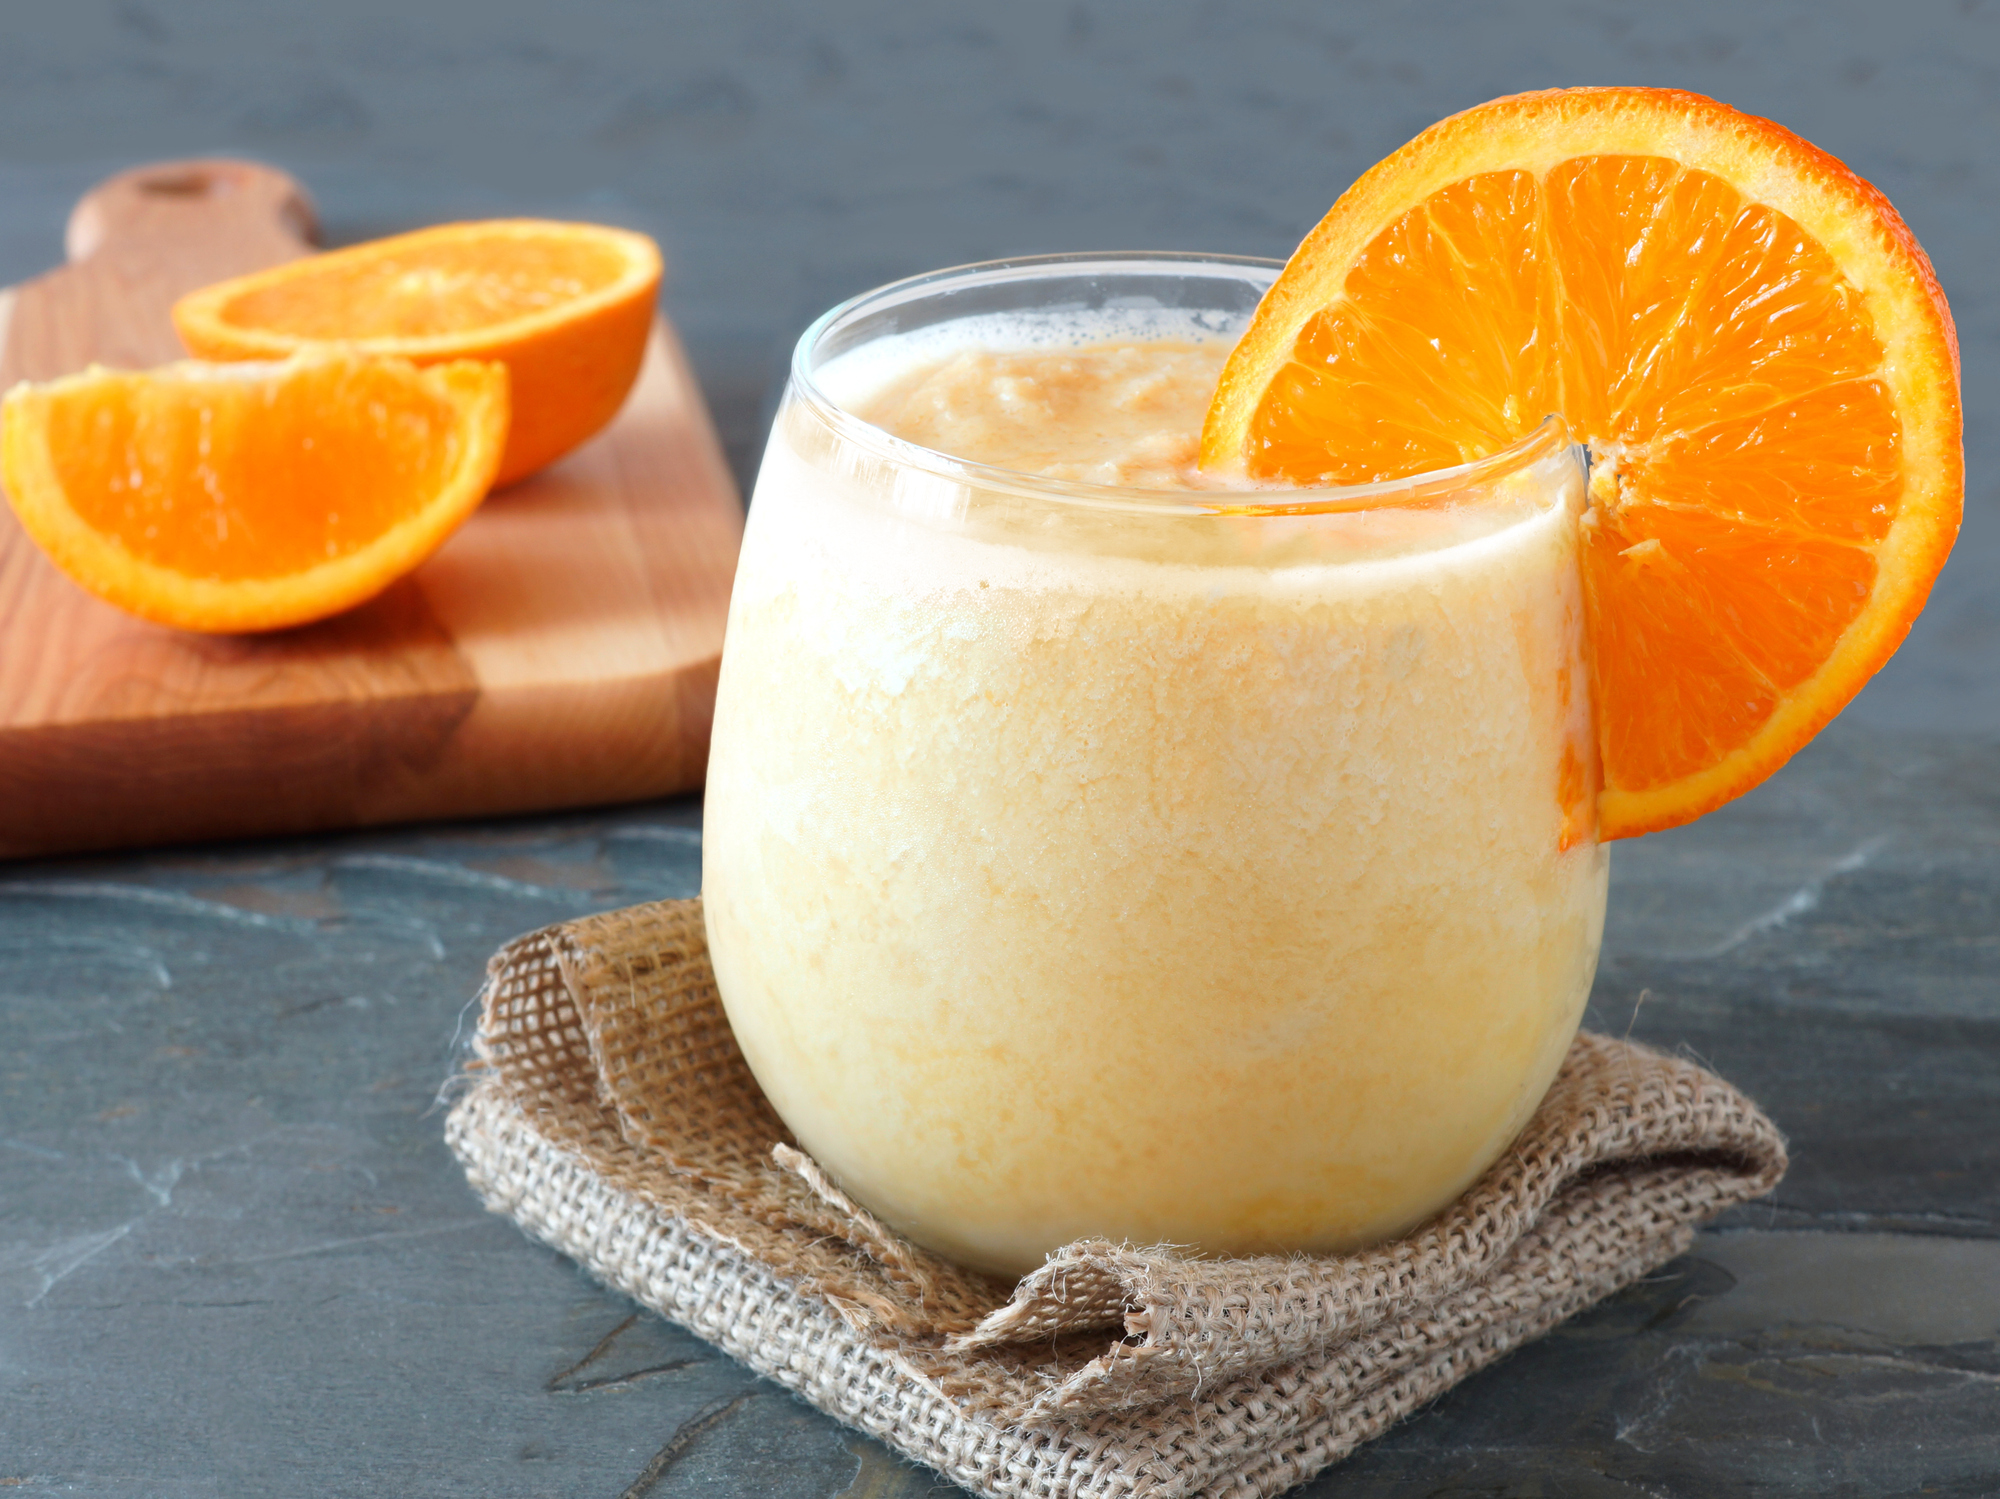 Orange Juice: Nutrition Facts, Calories and Benefits